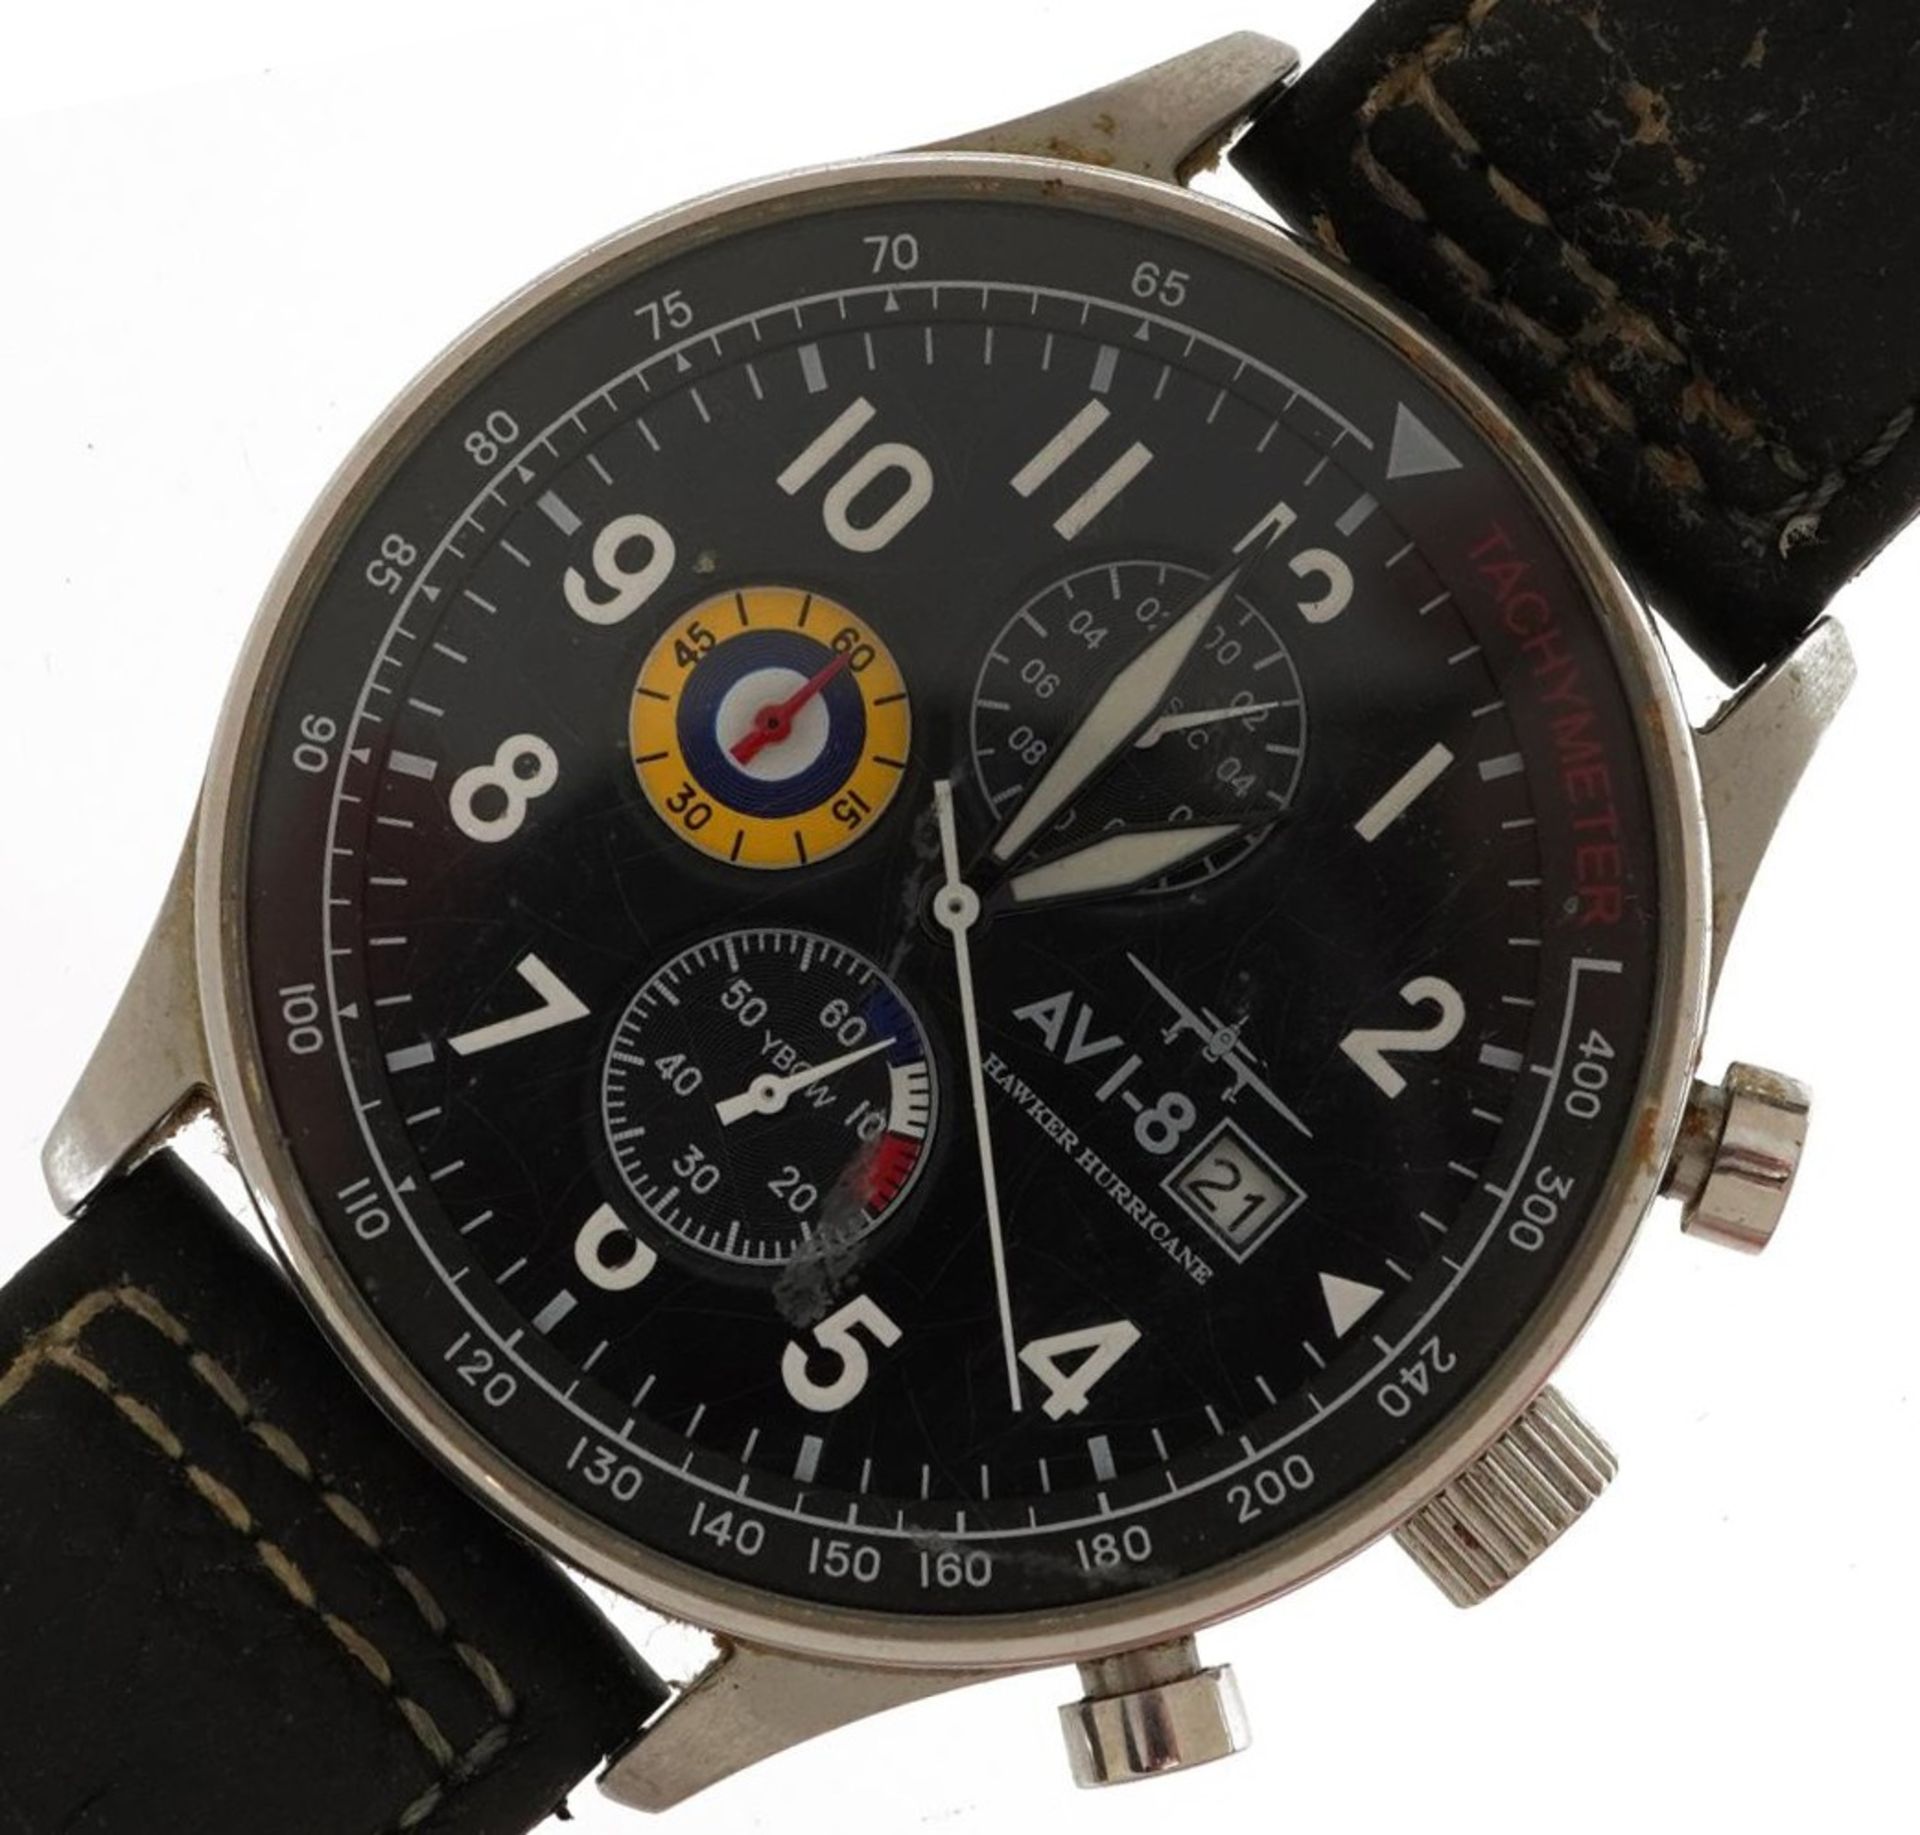 Gentlemen's A V I-8 Hawker Hurricane RAF interest wristwatch with date aperture, the case 43mm in